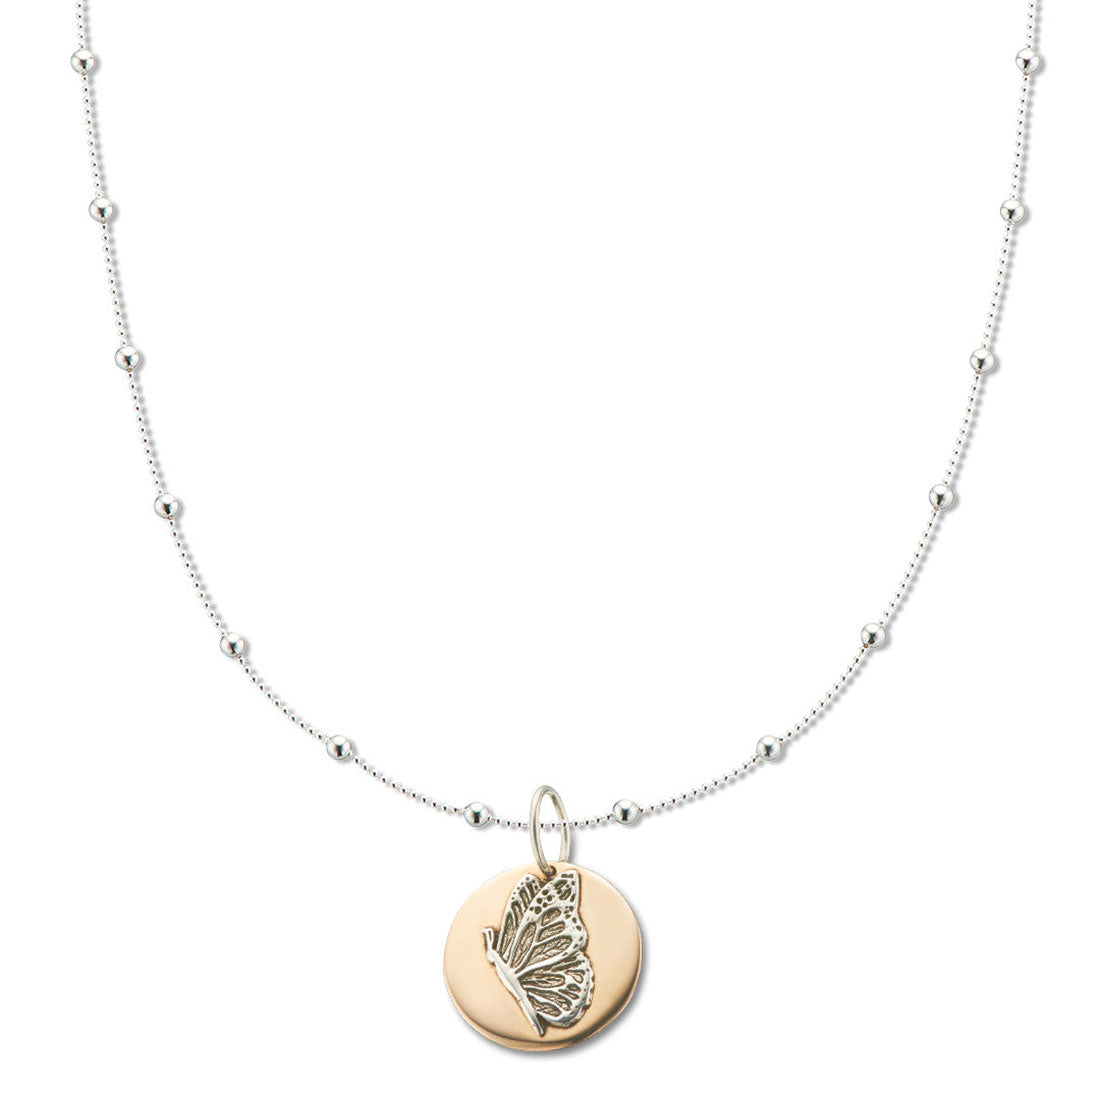 Silver fine ball bead chain necklace